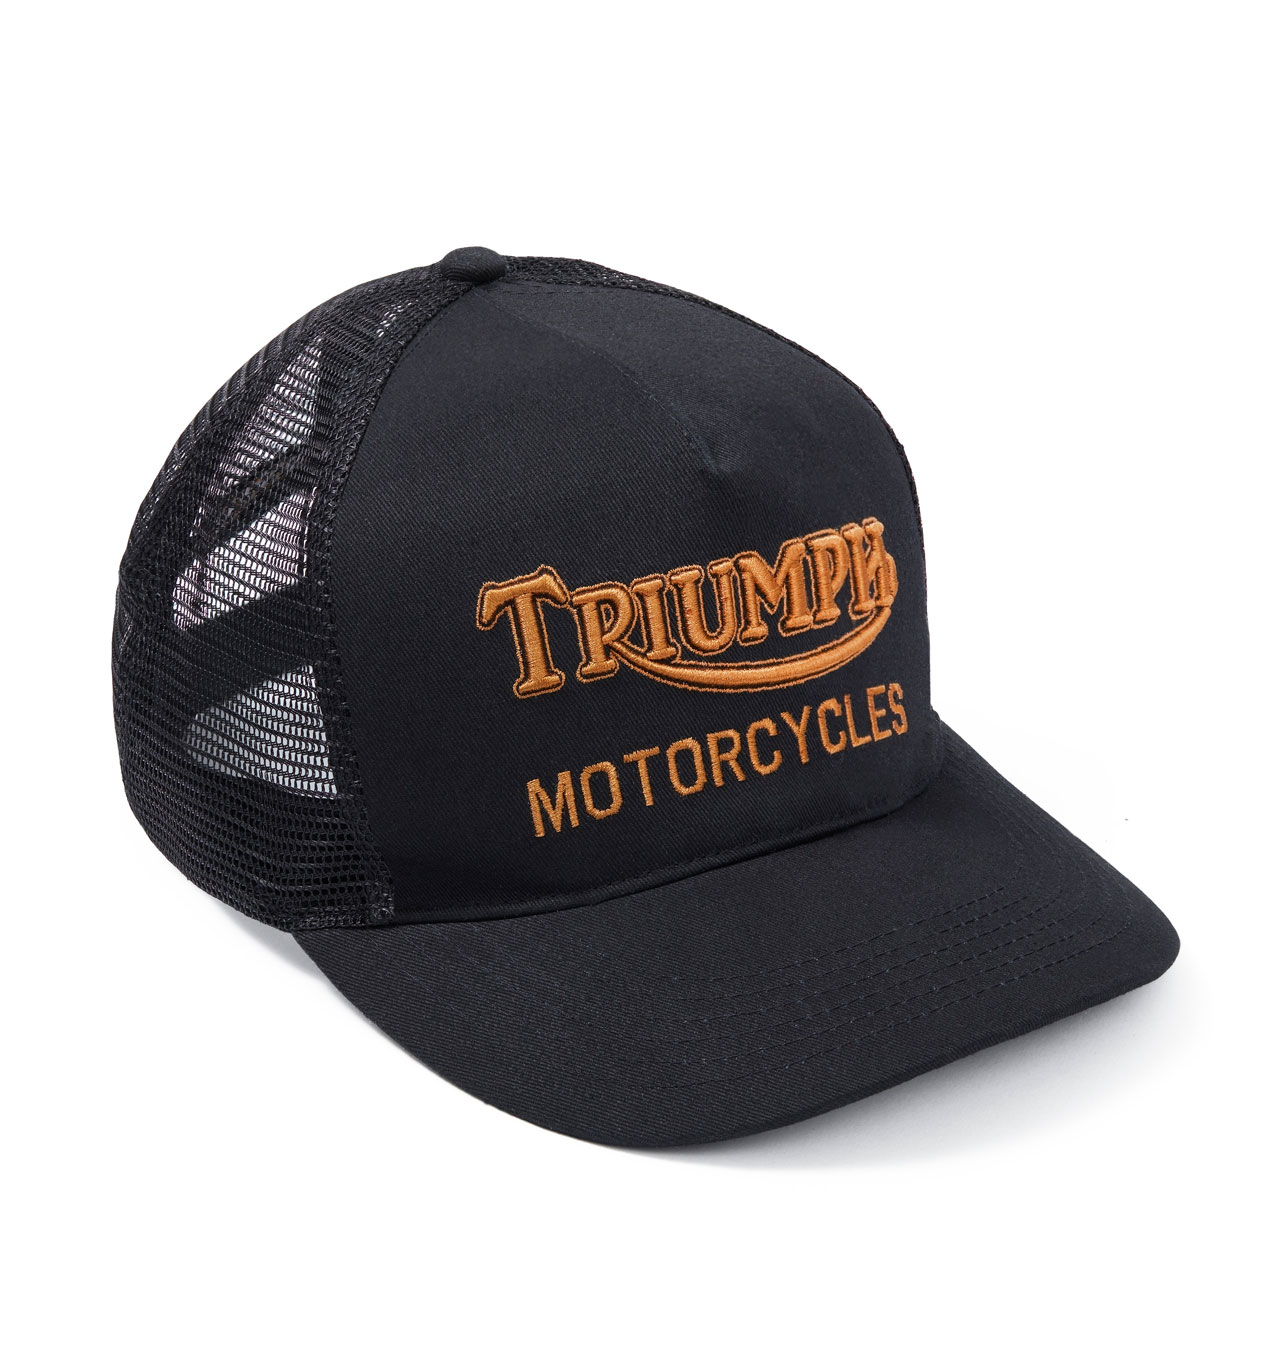 Triumph Motorcycles - Oil Trucker Cap - Black/Gold